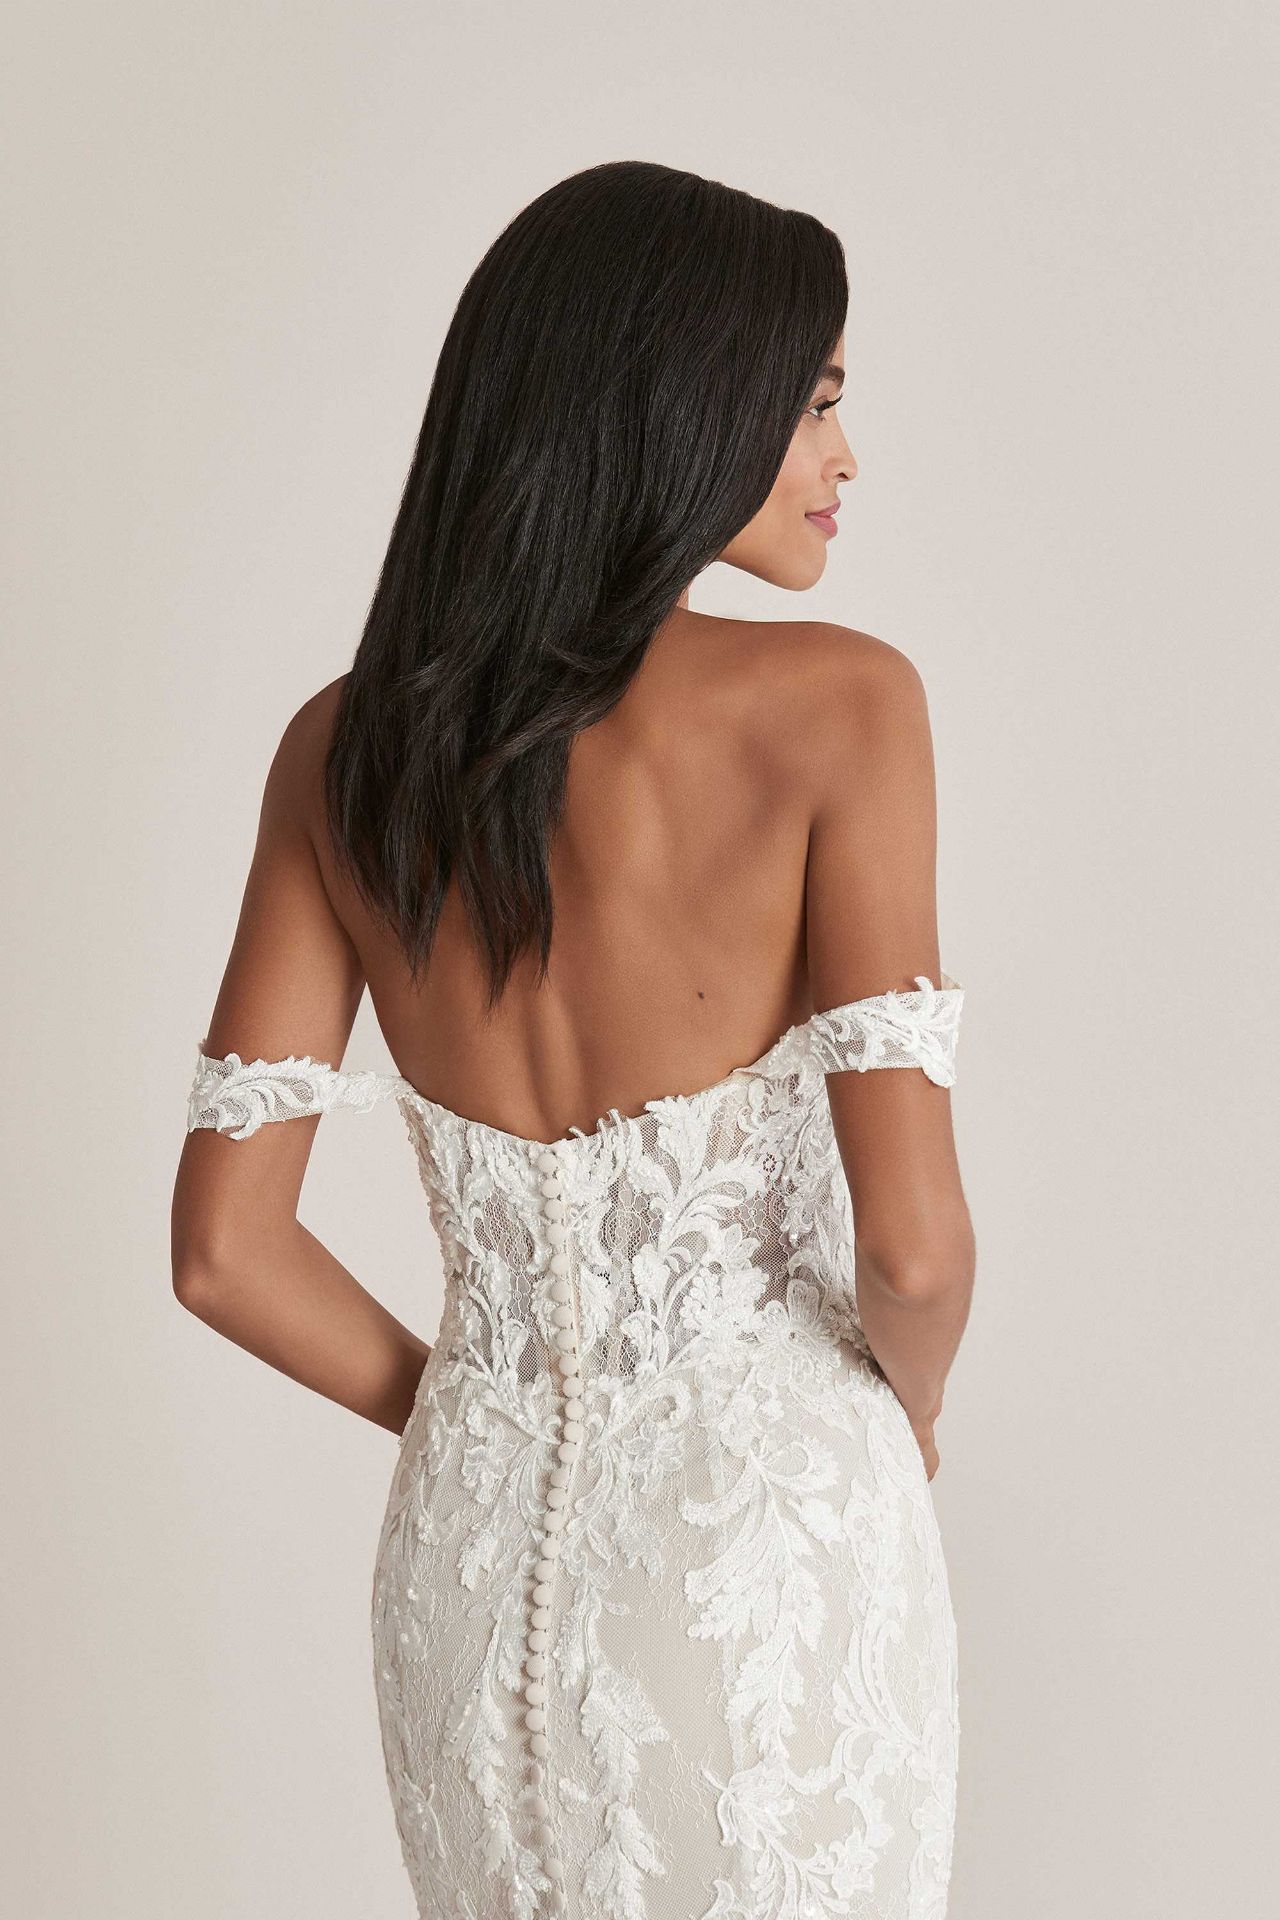 1 x Justin Alexander 'Caela' Off-The-Shoulder Lace Fit Wedding Dress - UK Size 10 - RRP £1,750 - Image 4 of 4